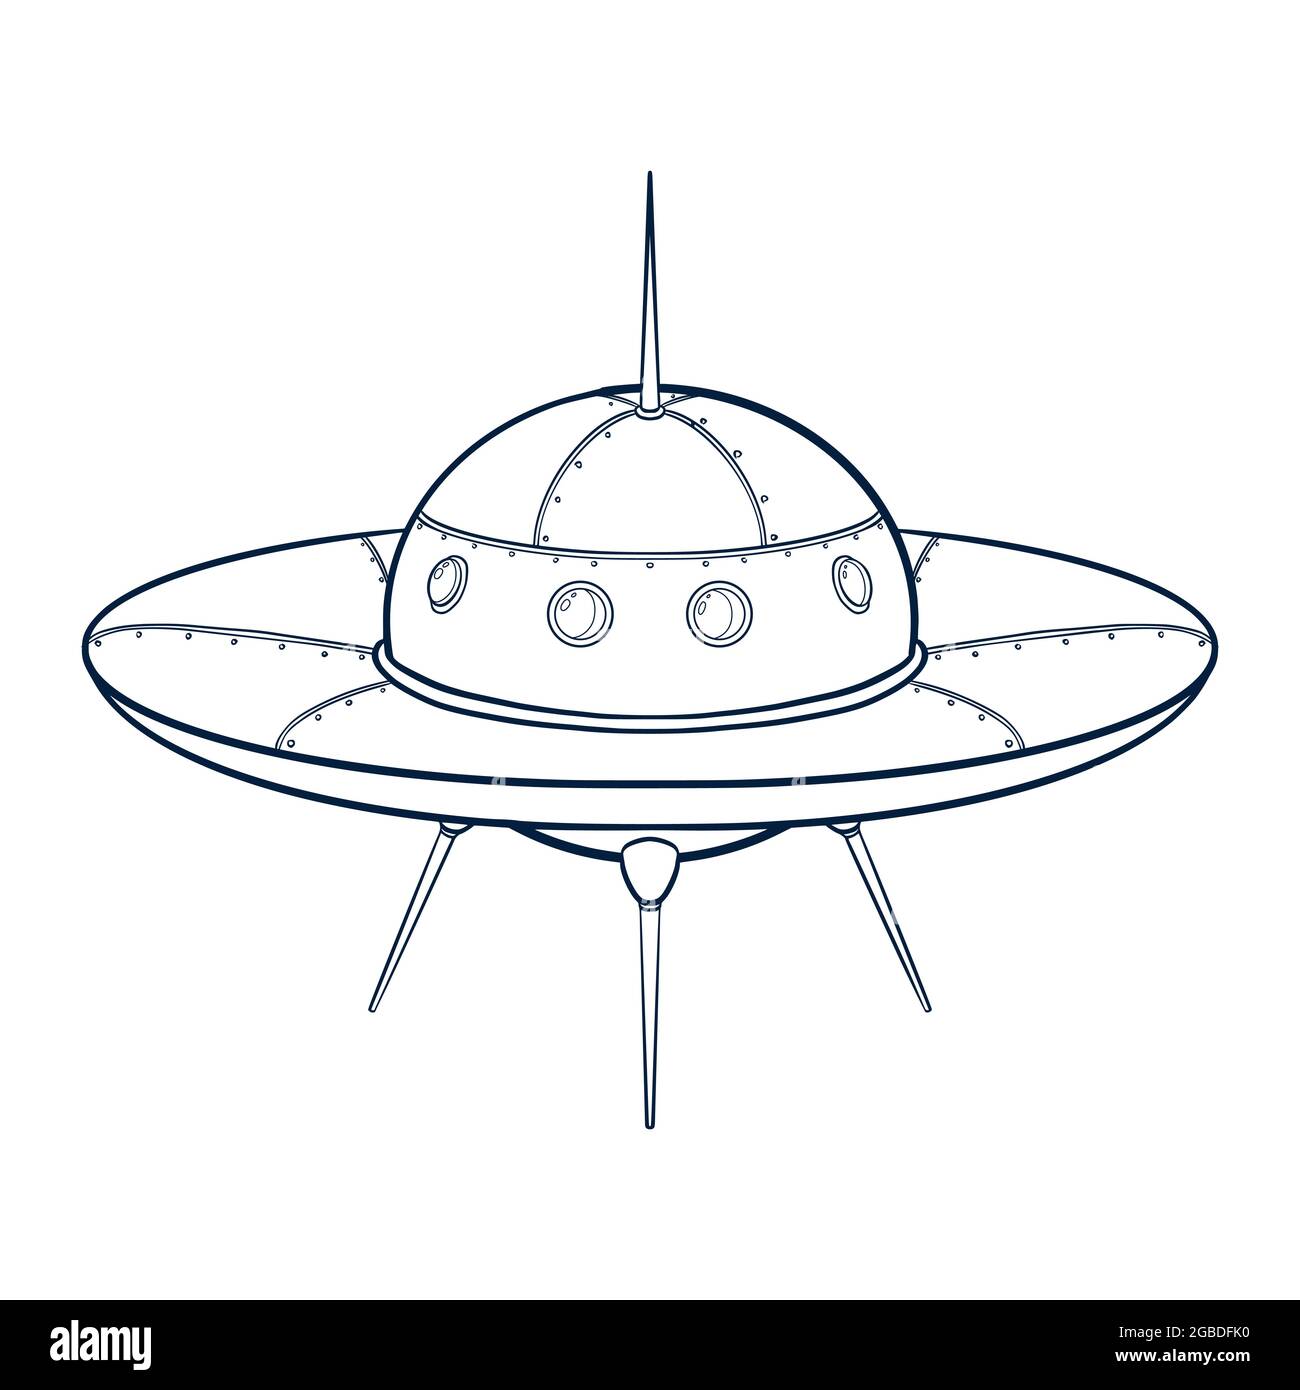 Spaceship Illustration. Line Art cartoon spacecraft icon. UFO sketch template for logo, emblem, Web design, Print, Sticker, Card Stock Vector